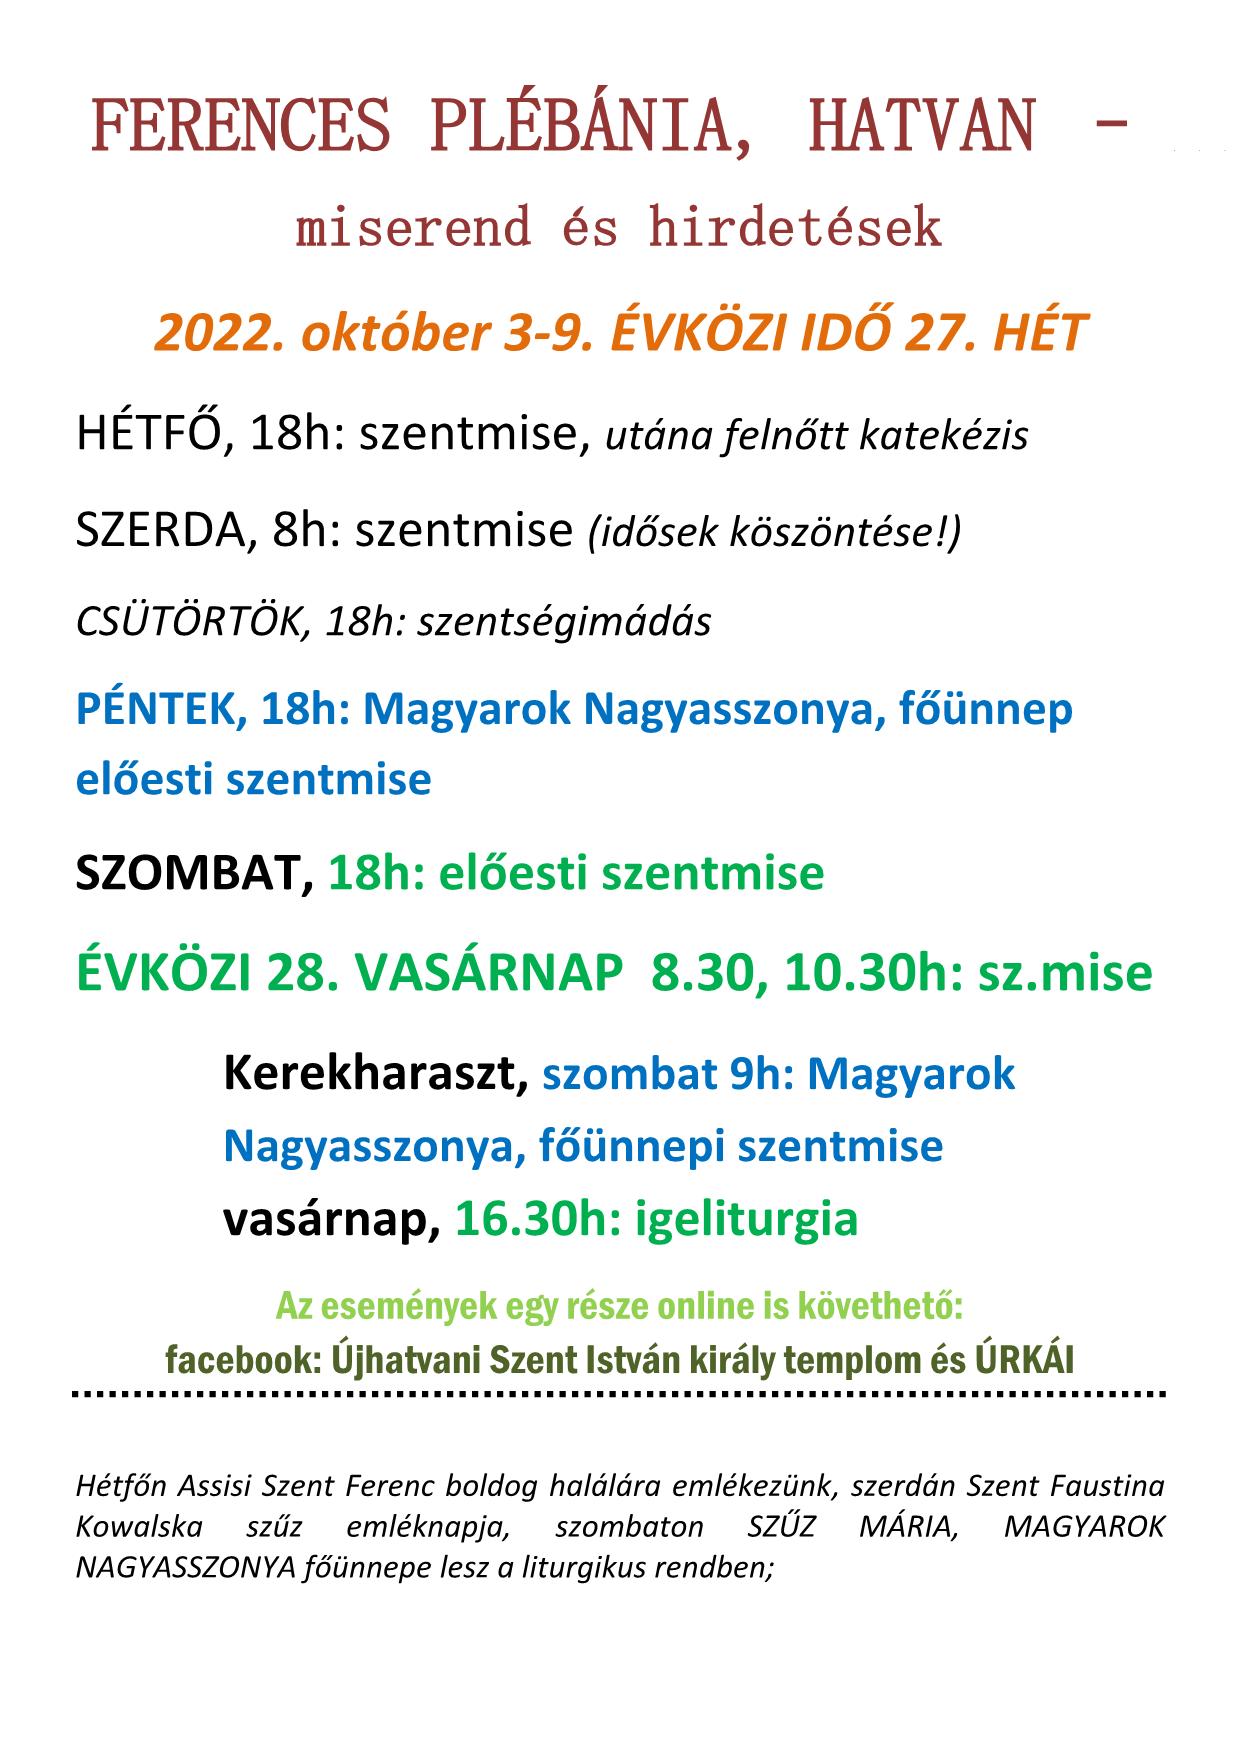 HATVAN FERENCES 2022.10.02 1